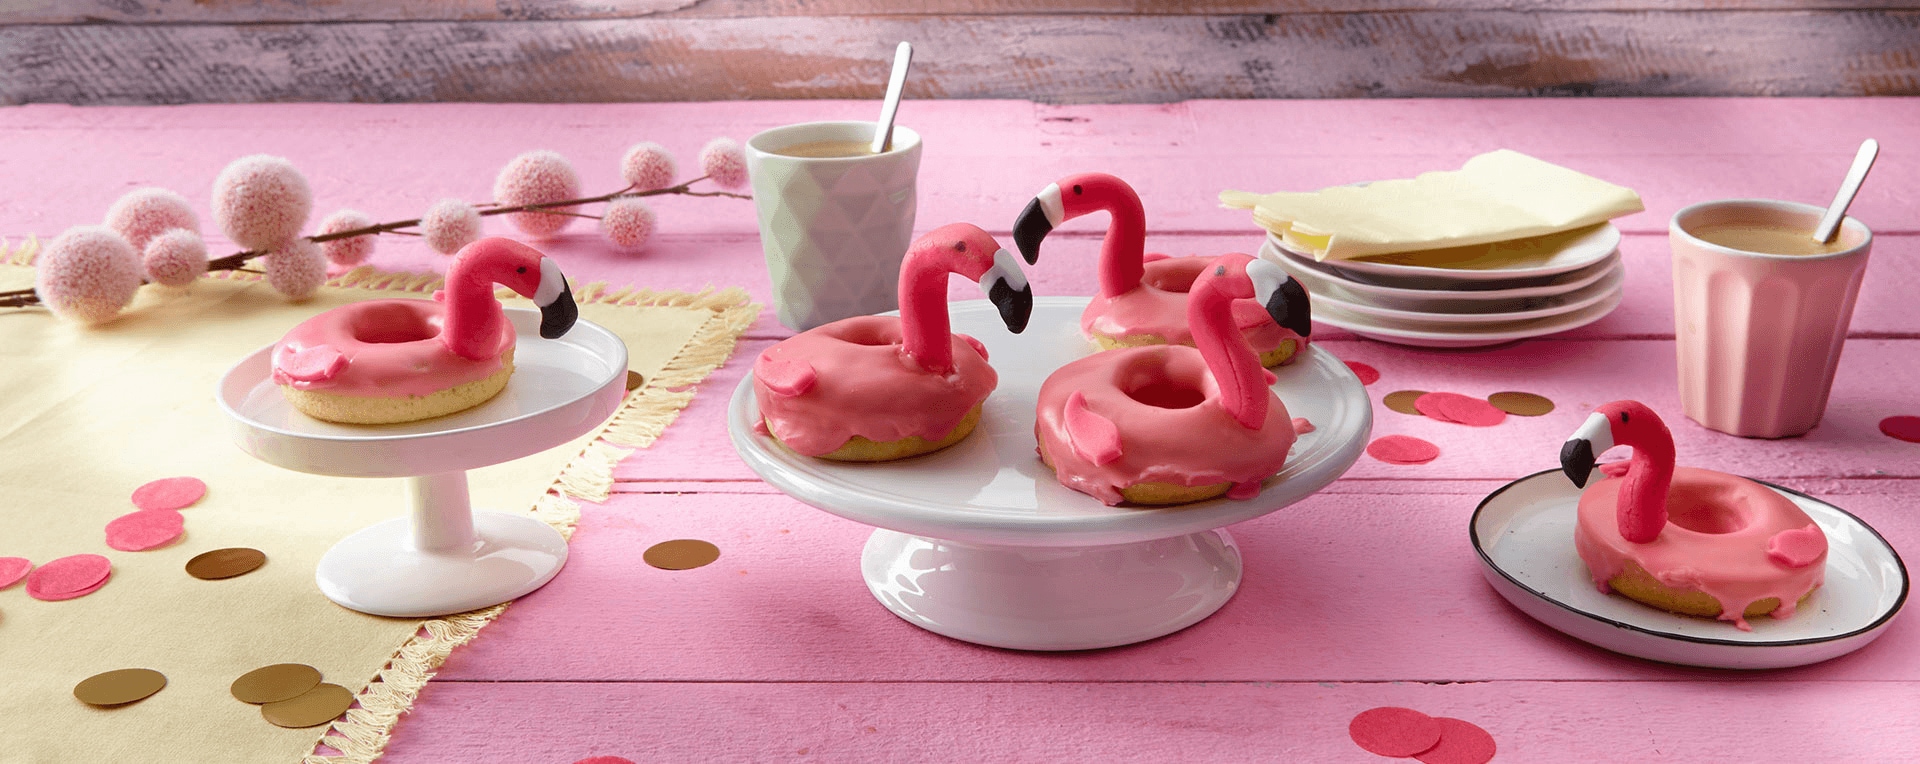 Flamingo Donuts